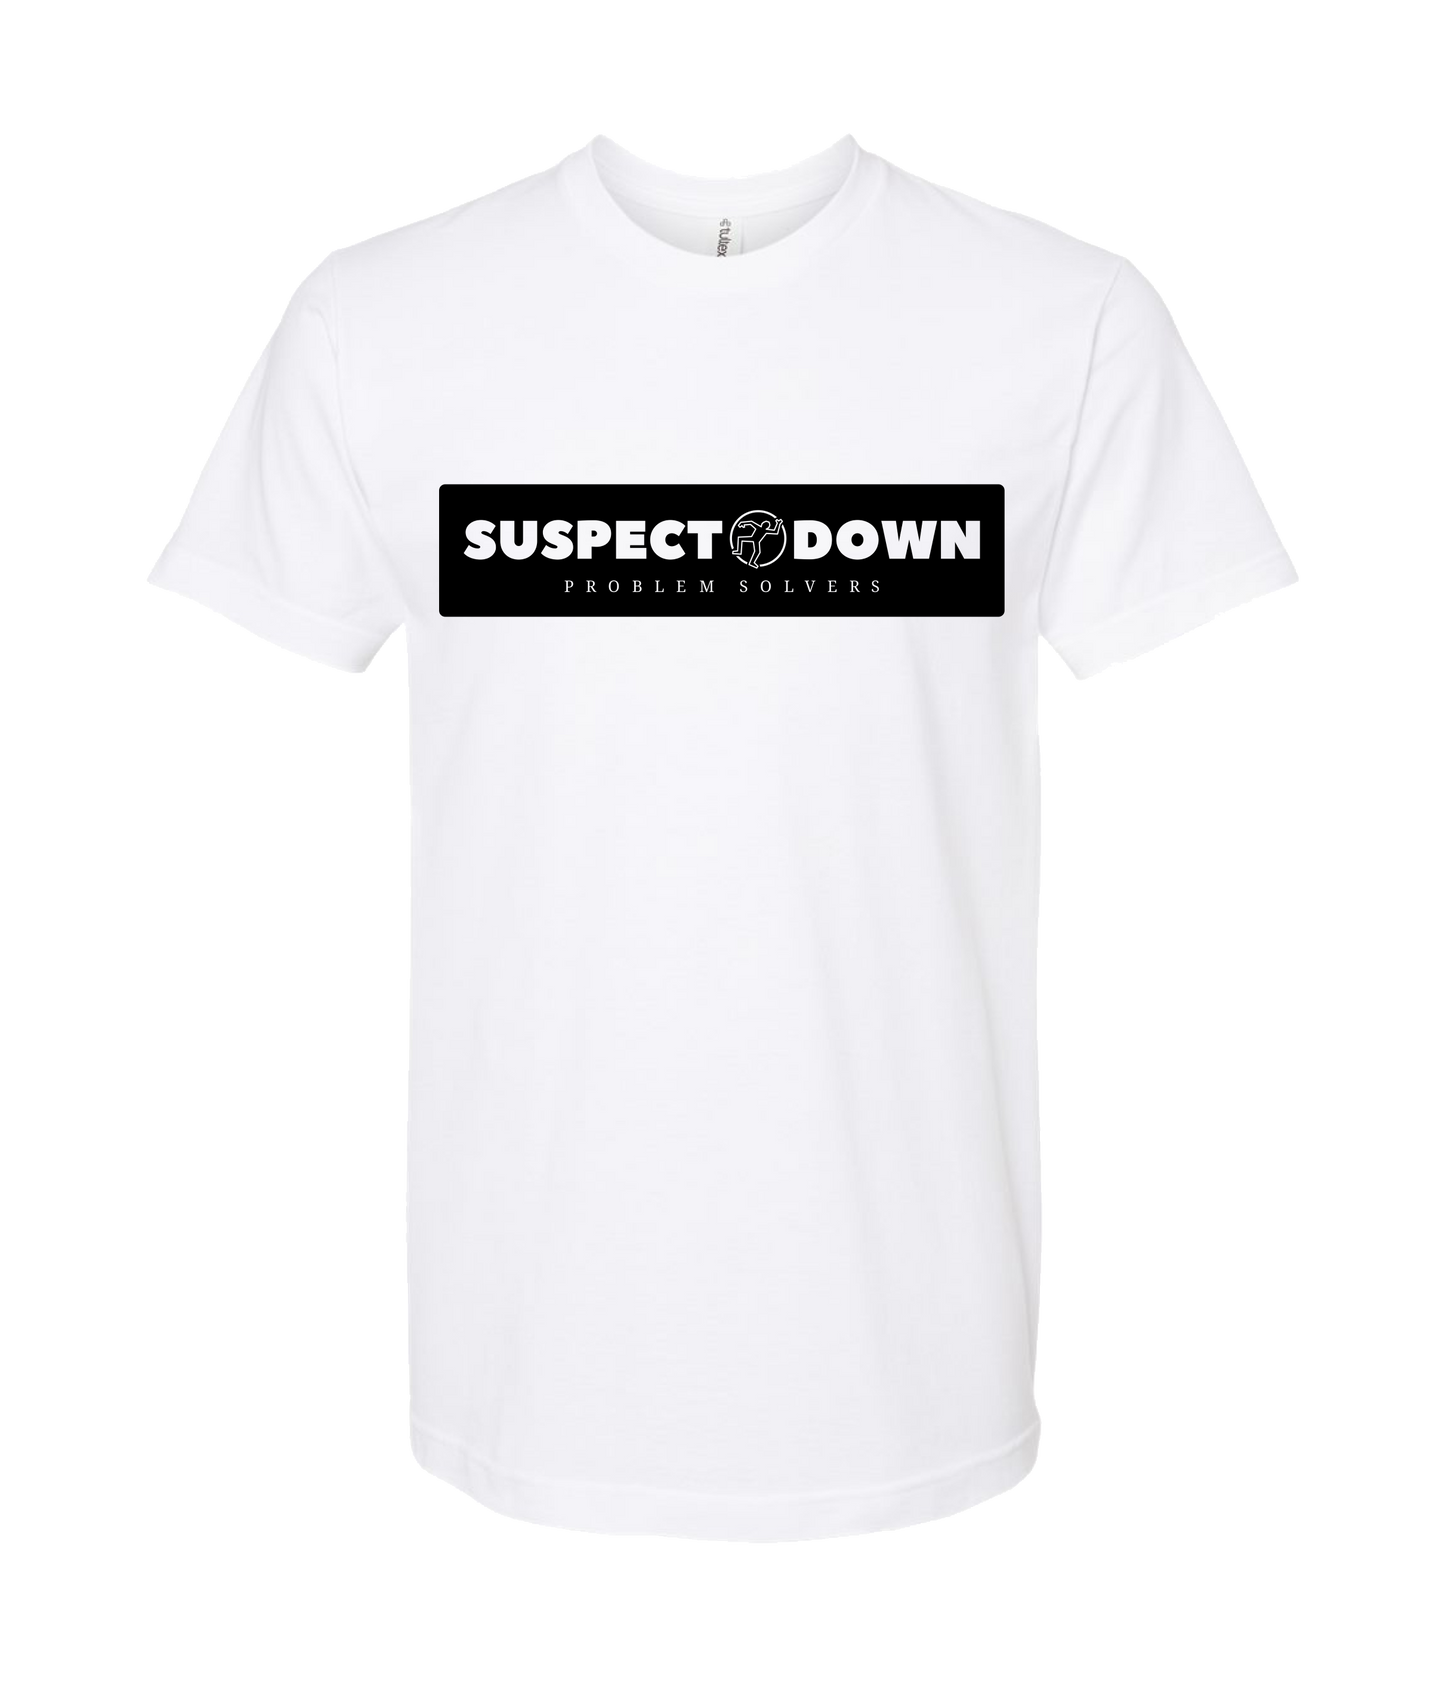 Suspect Down - PROBLEM SOLVERS - White T Shirt